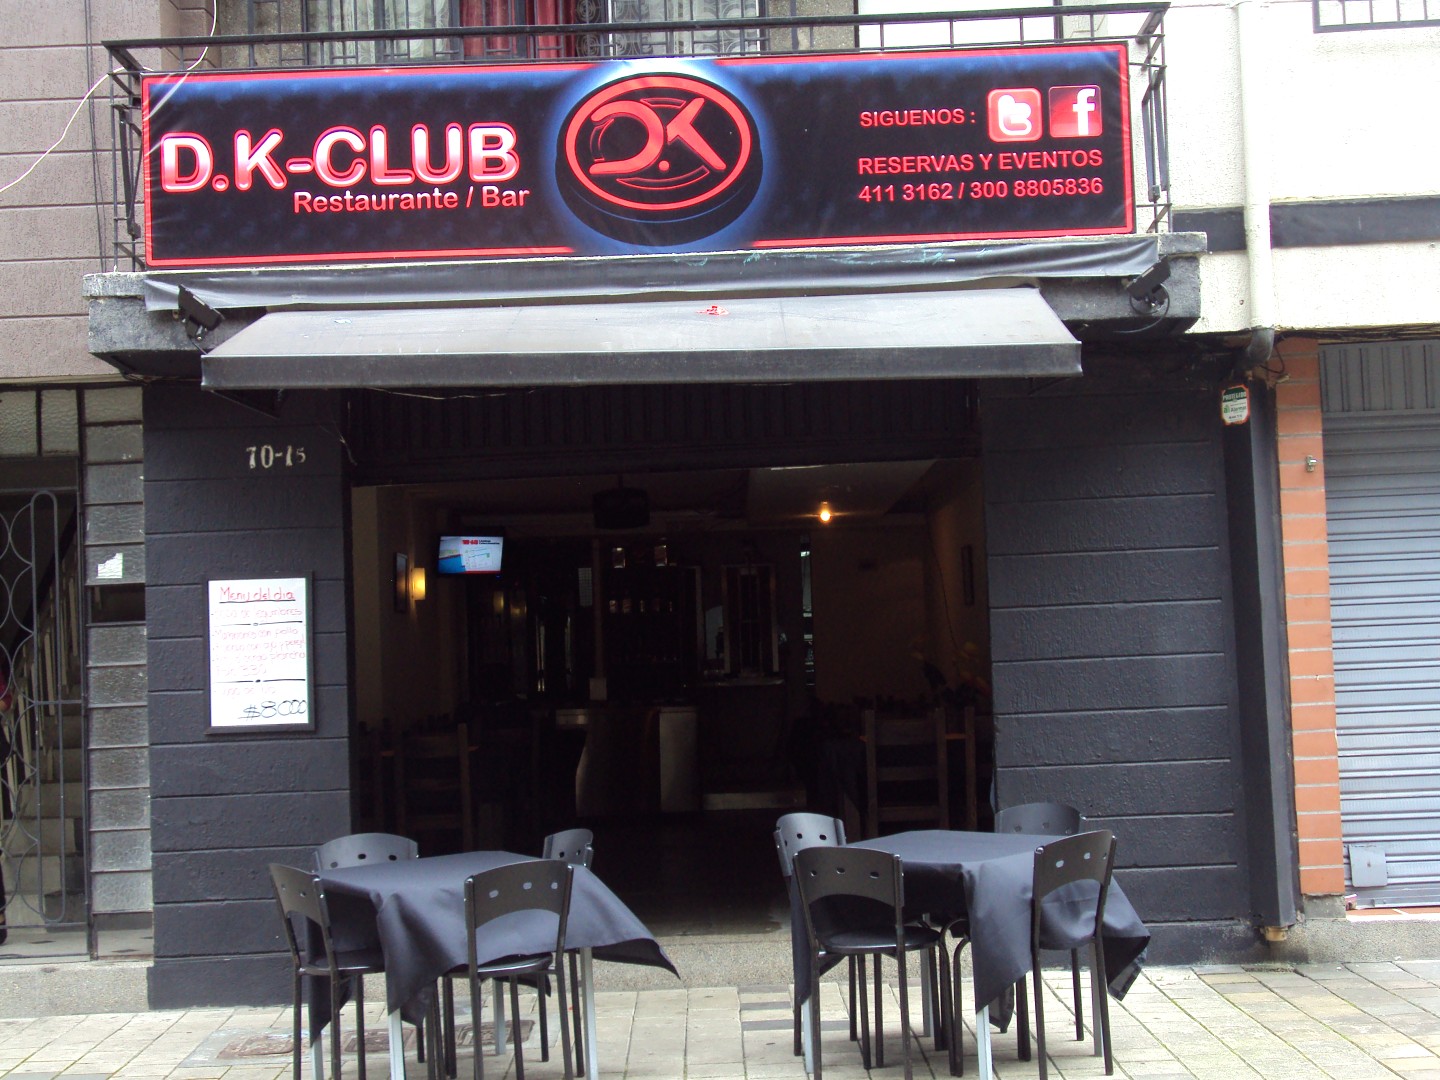 D.K-club